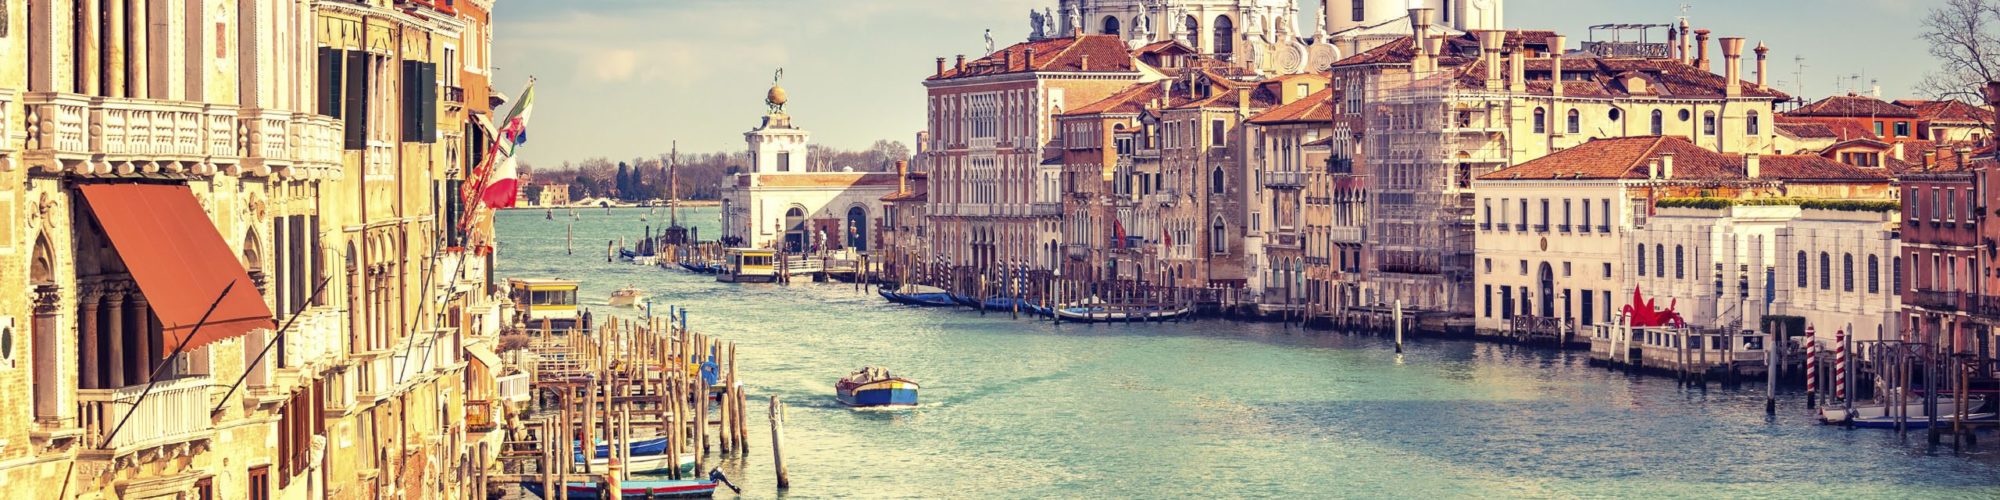 Venice travel agents packages deals